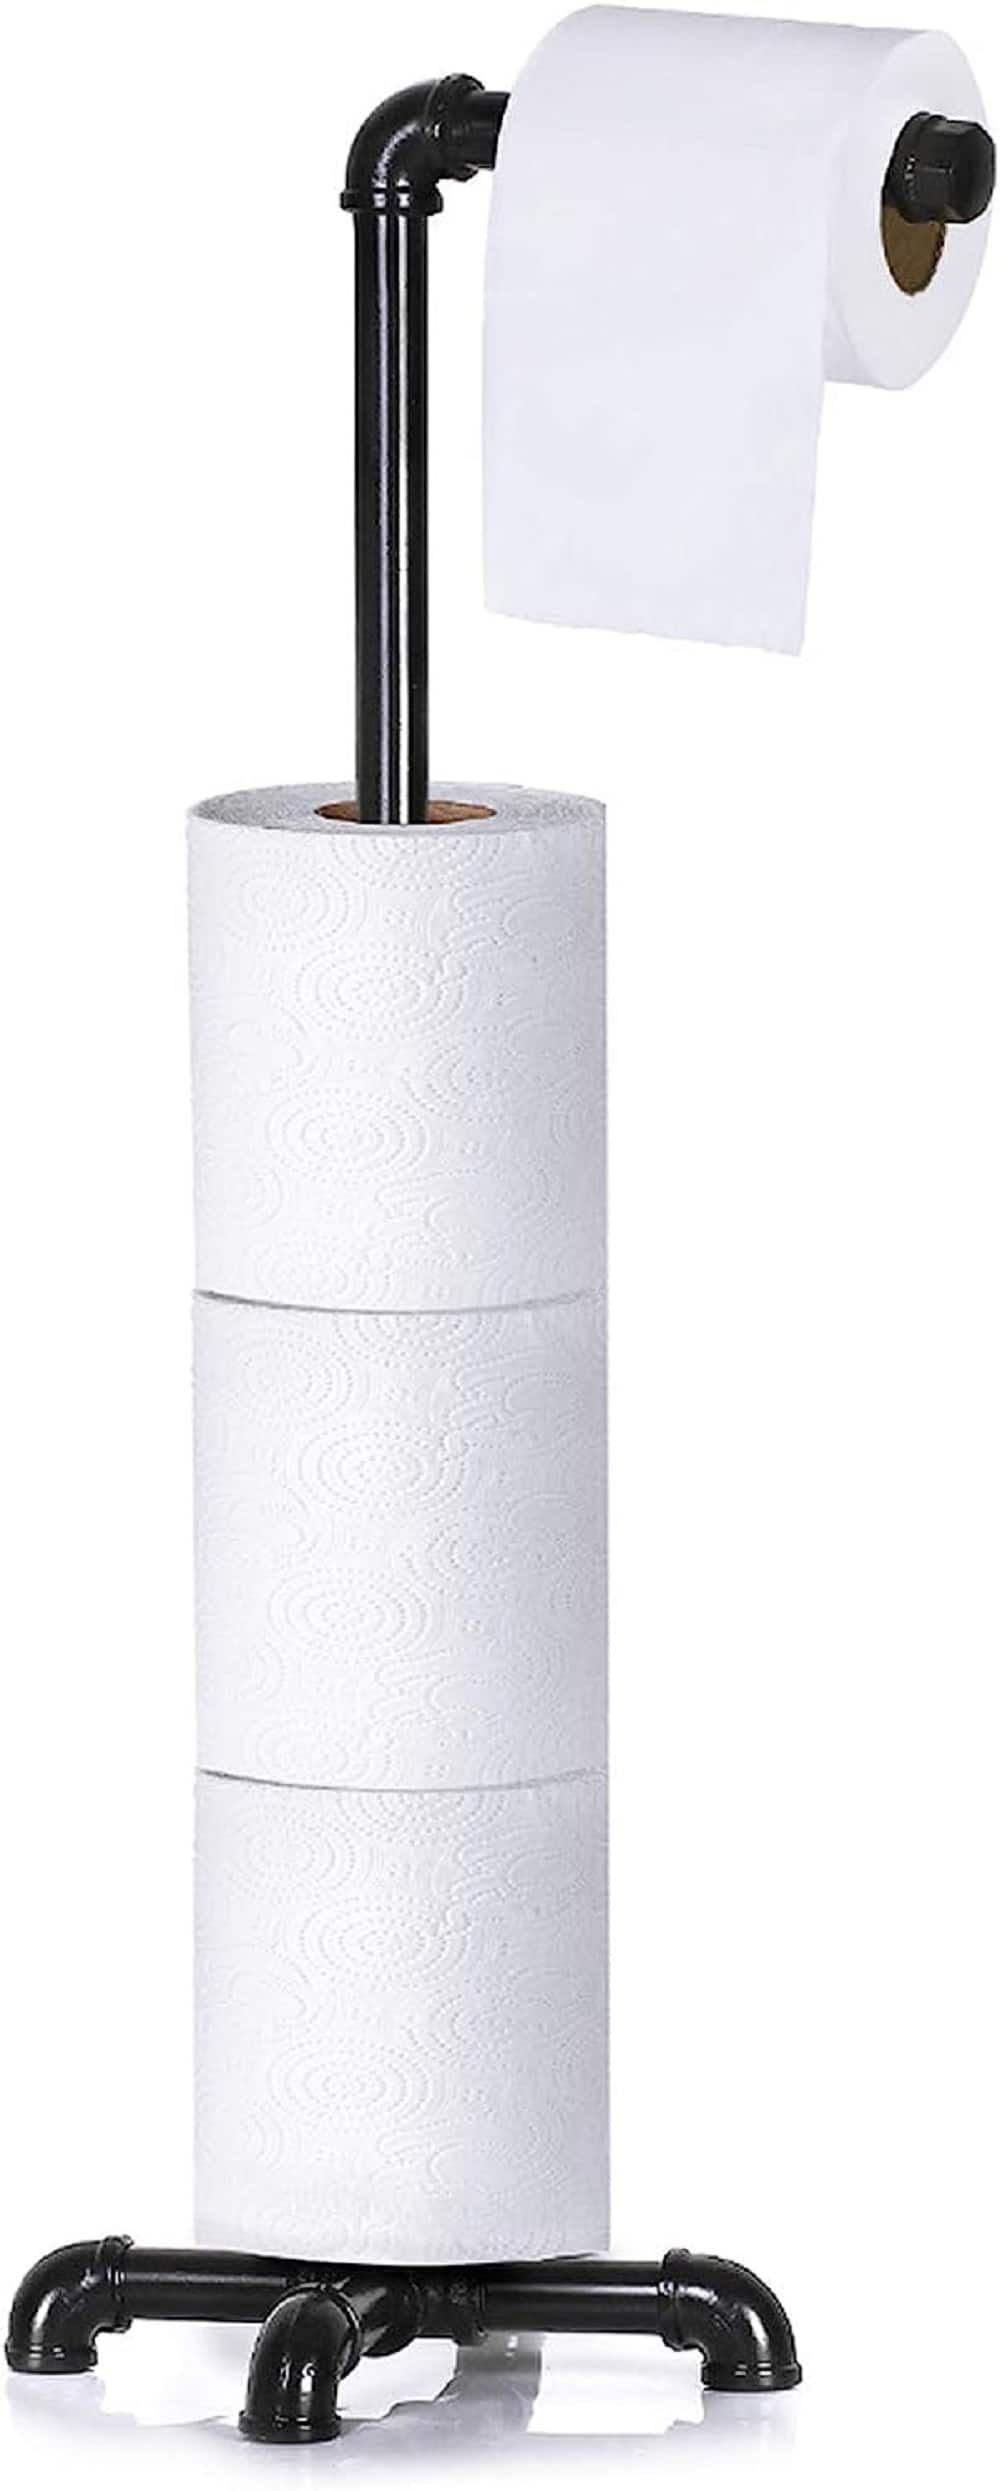 Free Standing Toilet Paper Holder